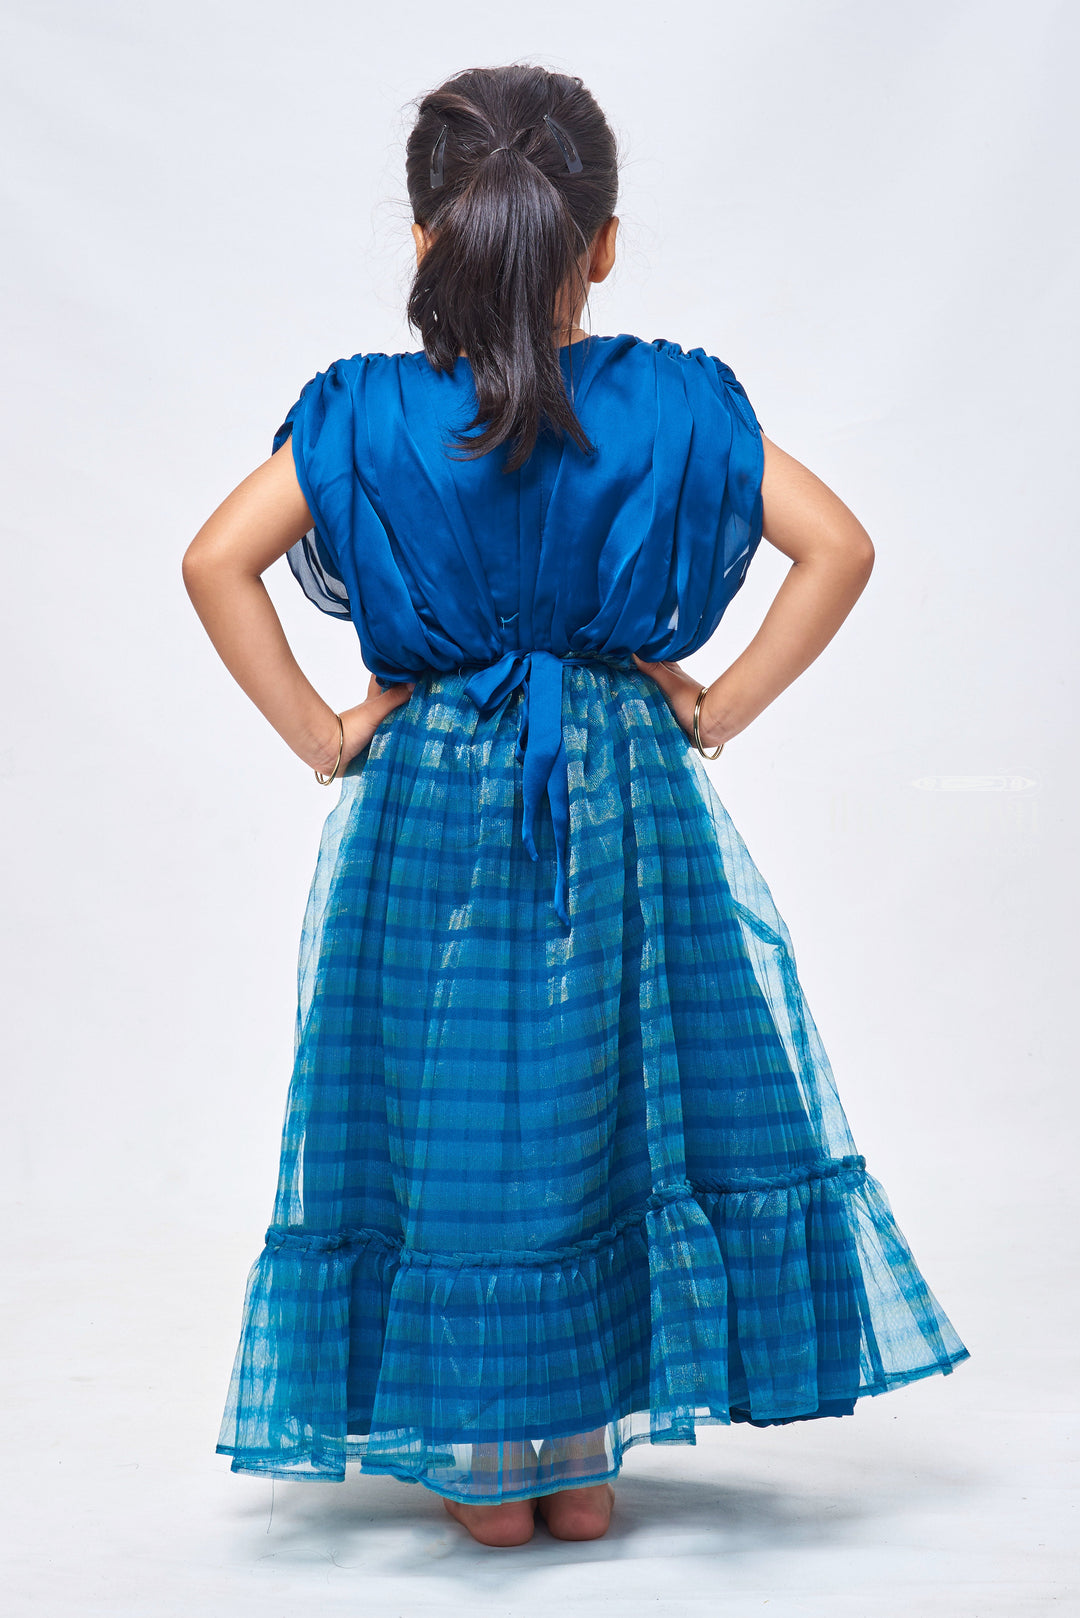 The Nesavu Girls Party Gown Azure Blue Striped Delight with Radiant Mirror Stone Patterns: Ethereal Elegance for Aspiring Divas Nesavu Anarkali Dress Collection | Anarkali Festive Wear | the Nesavu